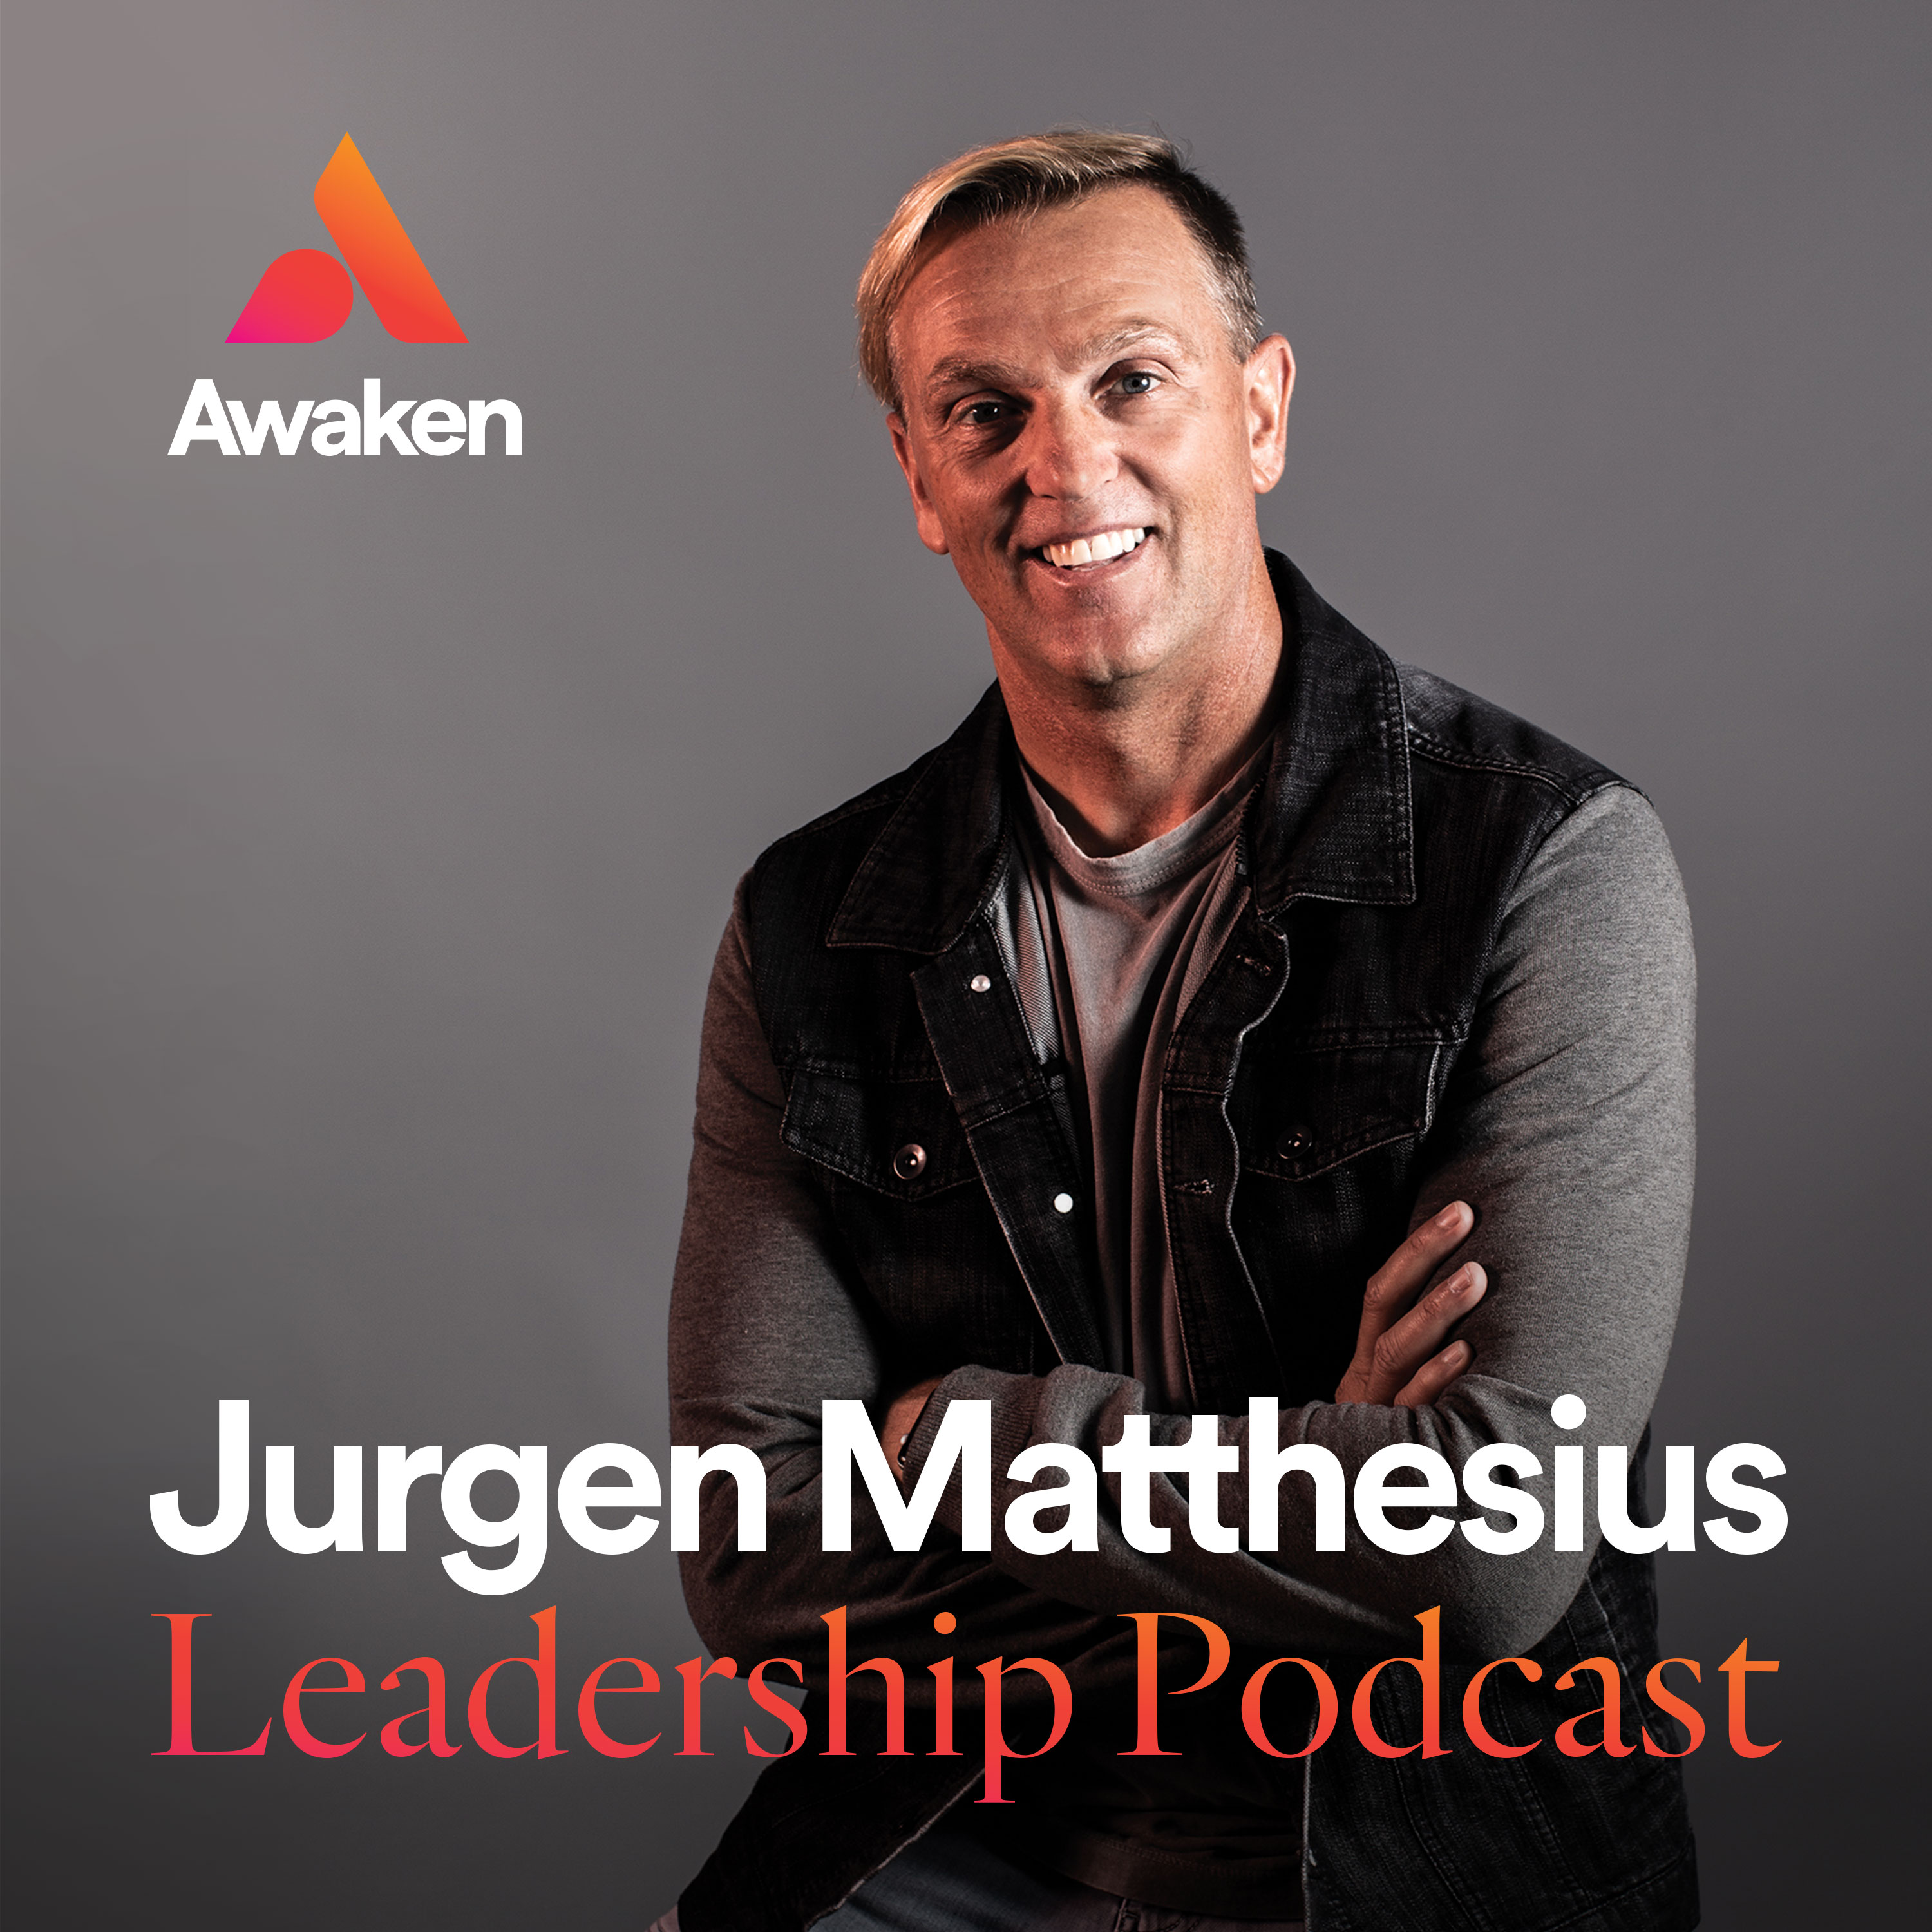 Leadership Development with Ps. Jurgen Matthesius & Awaken Church